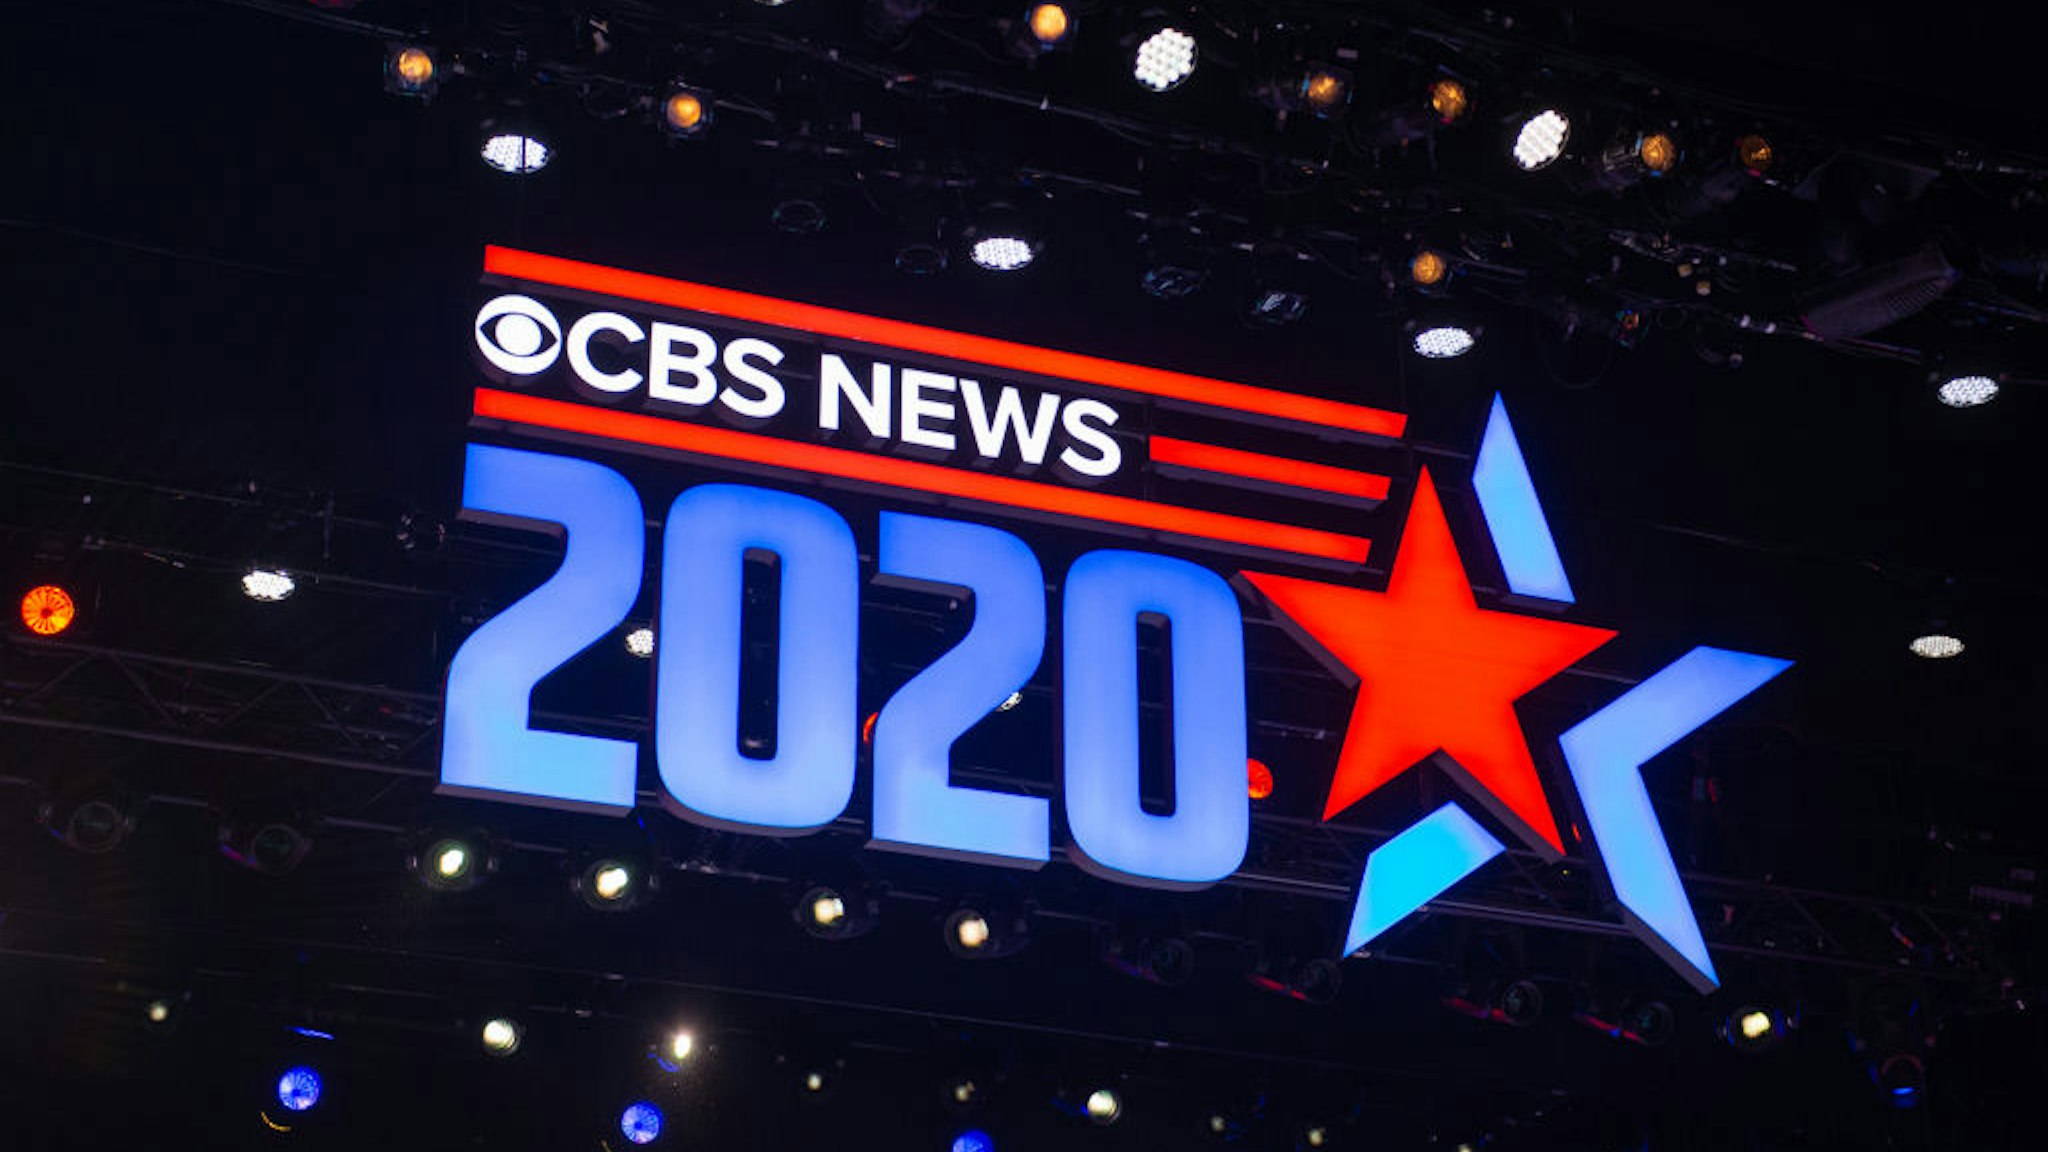 CBS News signage is displayed in the debate hall ahead of the Democratic presidential debate in Charleston, South Carolina, U.S., on Tuesday, Feb. 25, 2020.